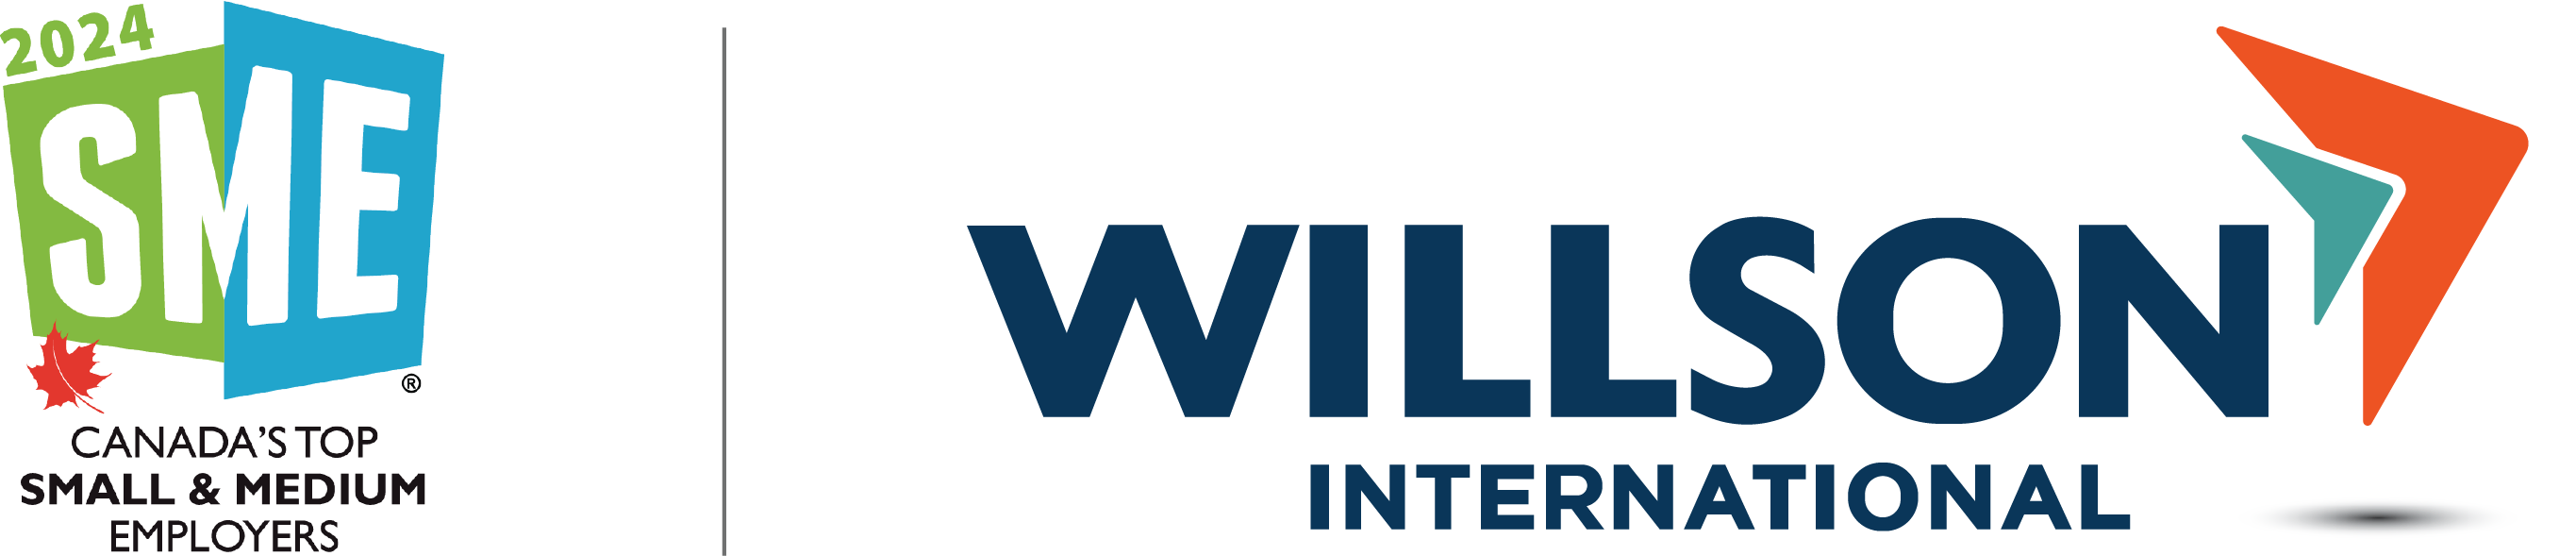 www.willsonintl.com